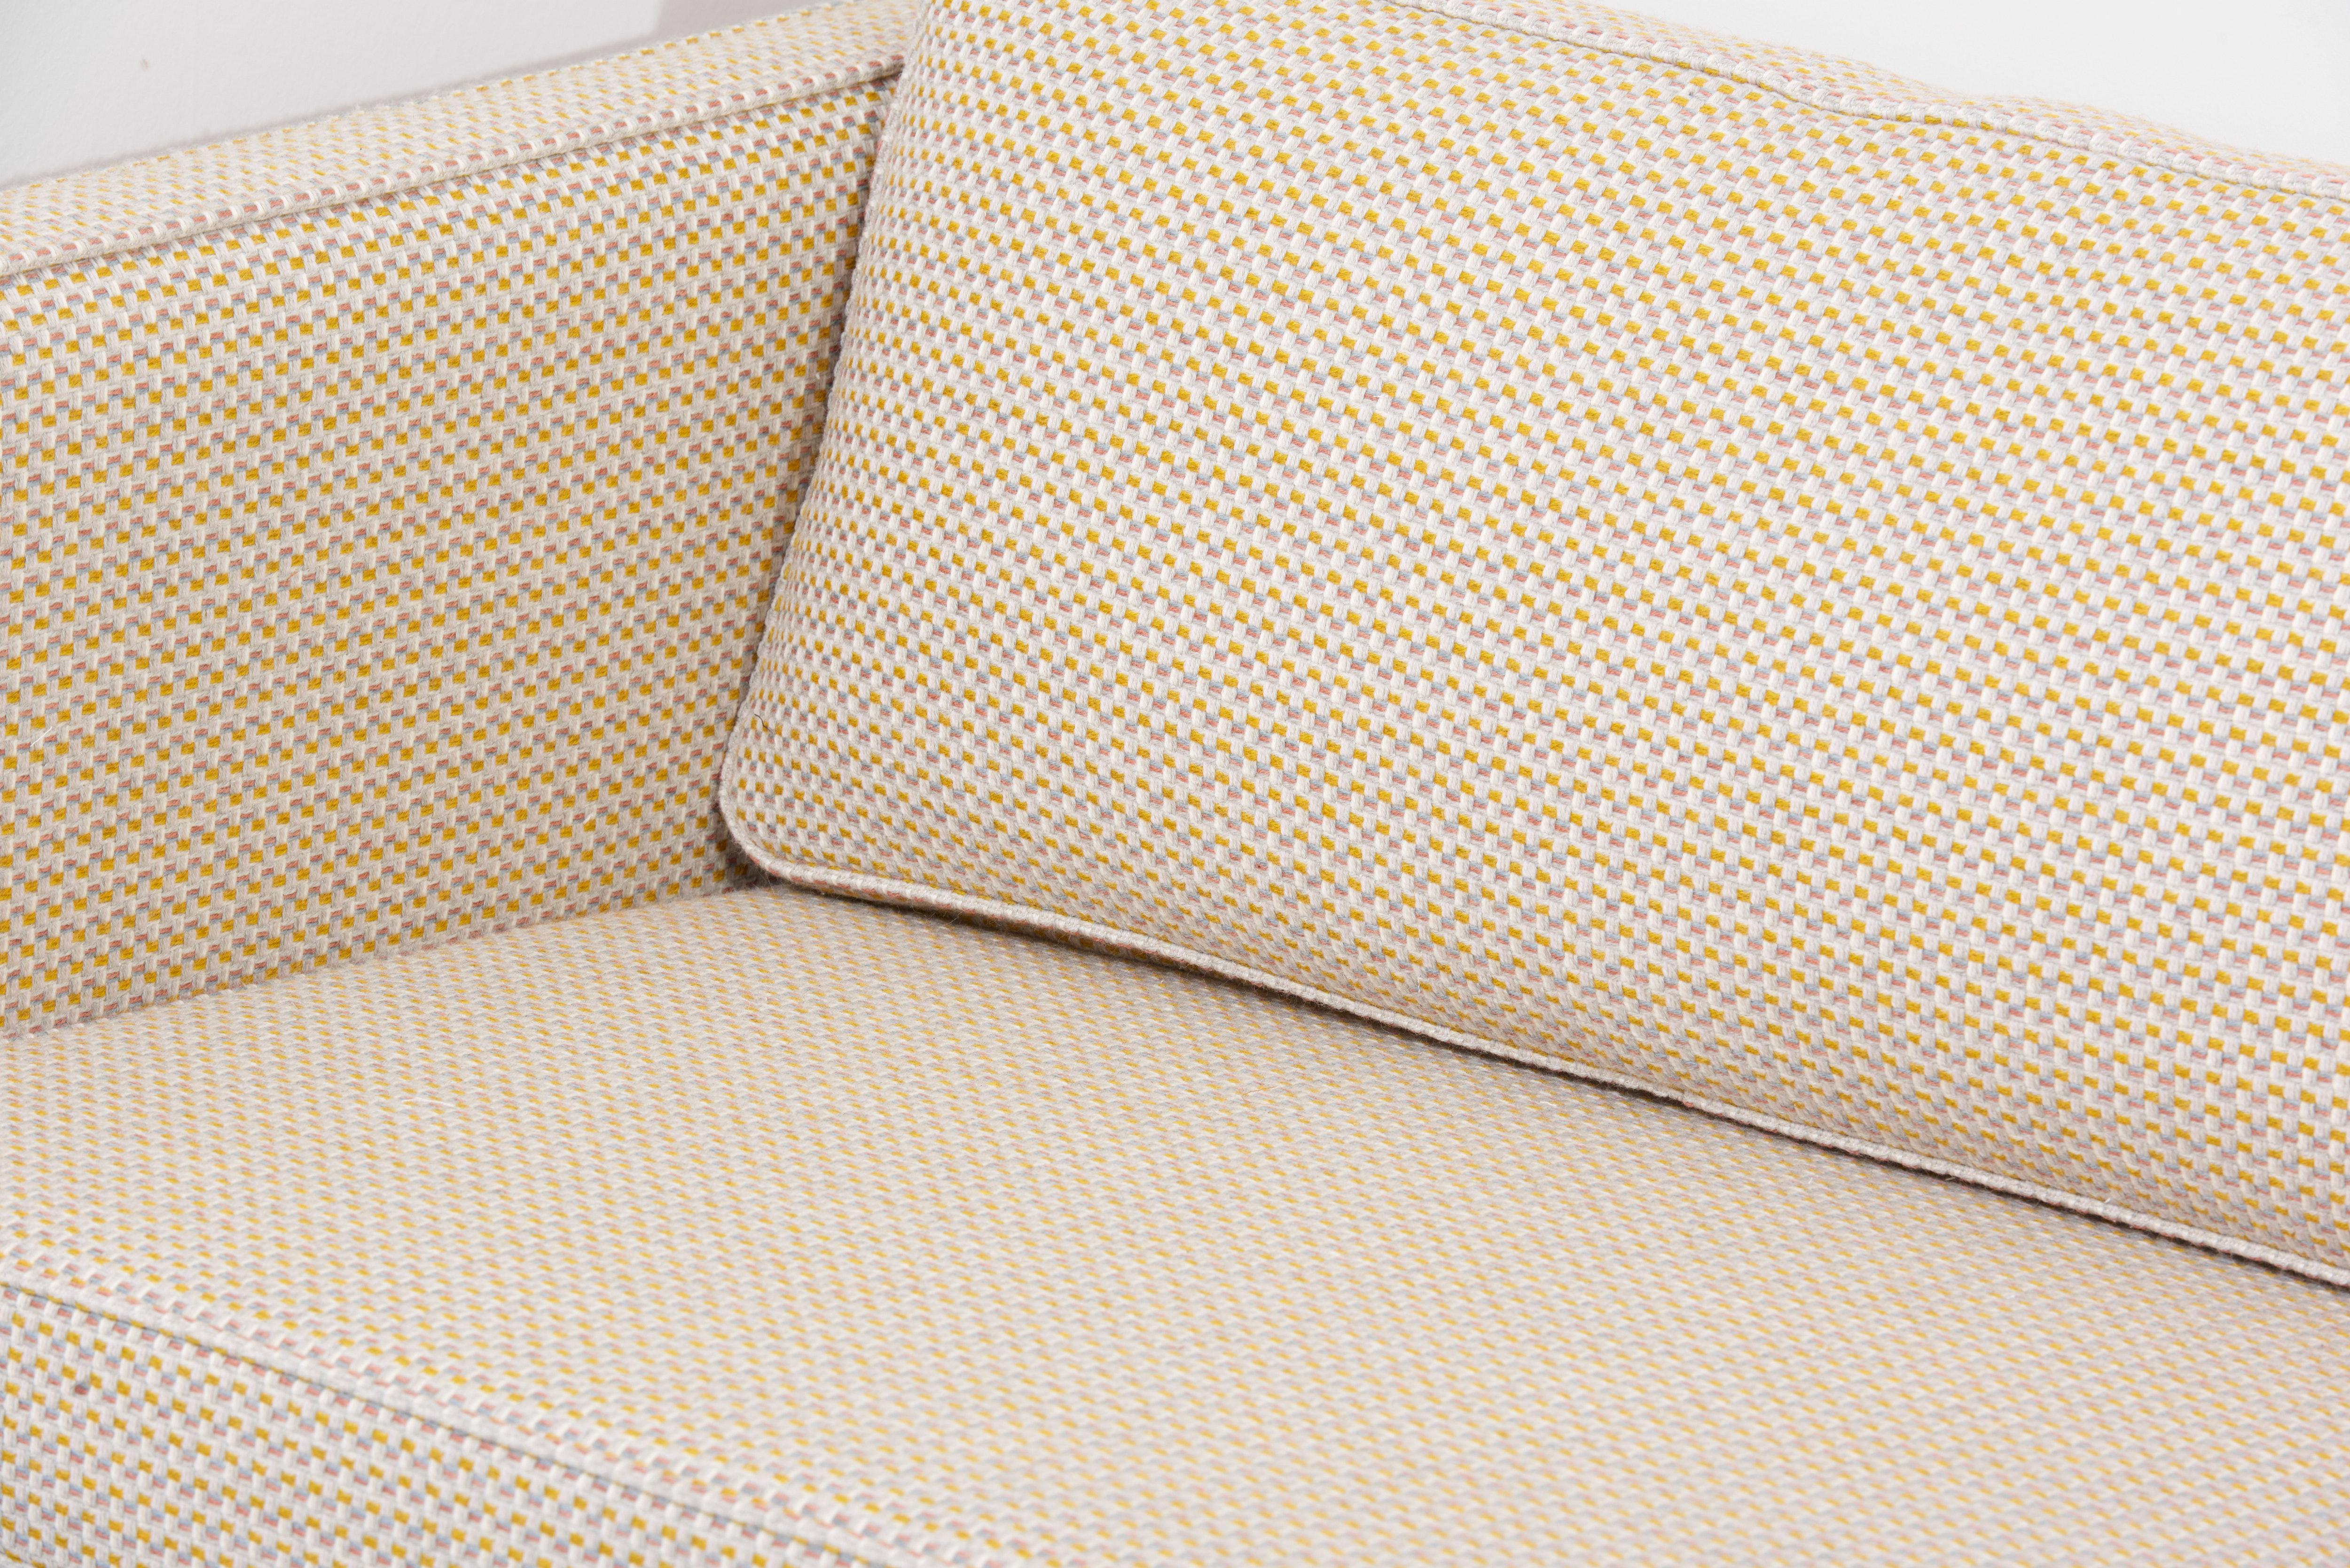 Restored Edward Wormley Tuxedo Sofa for Dunbar in yellow beige fabric, USA 1960s For Sale 6